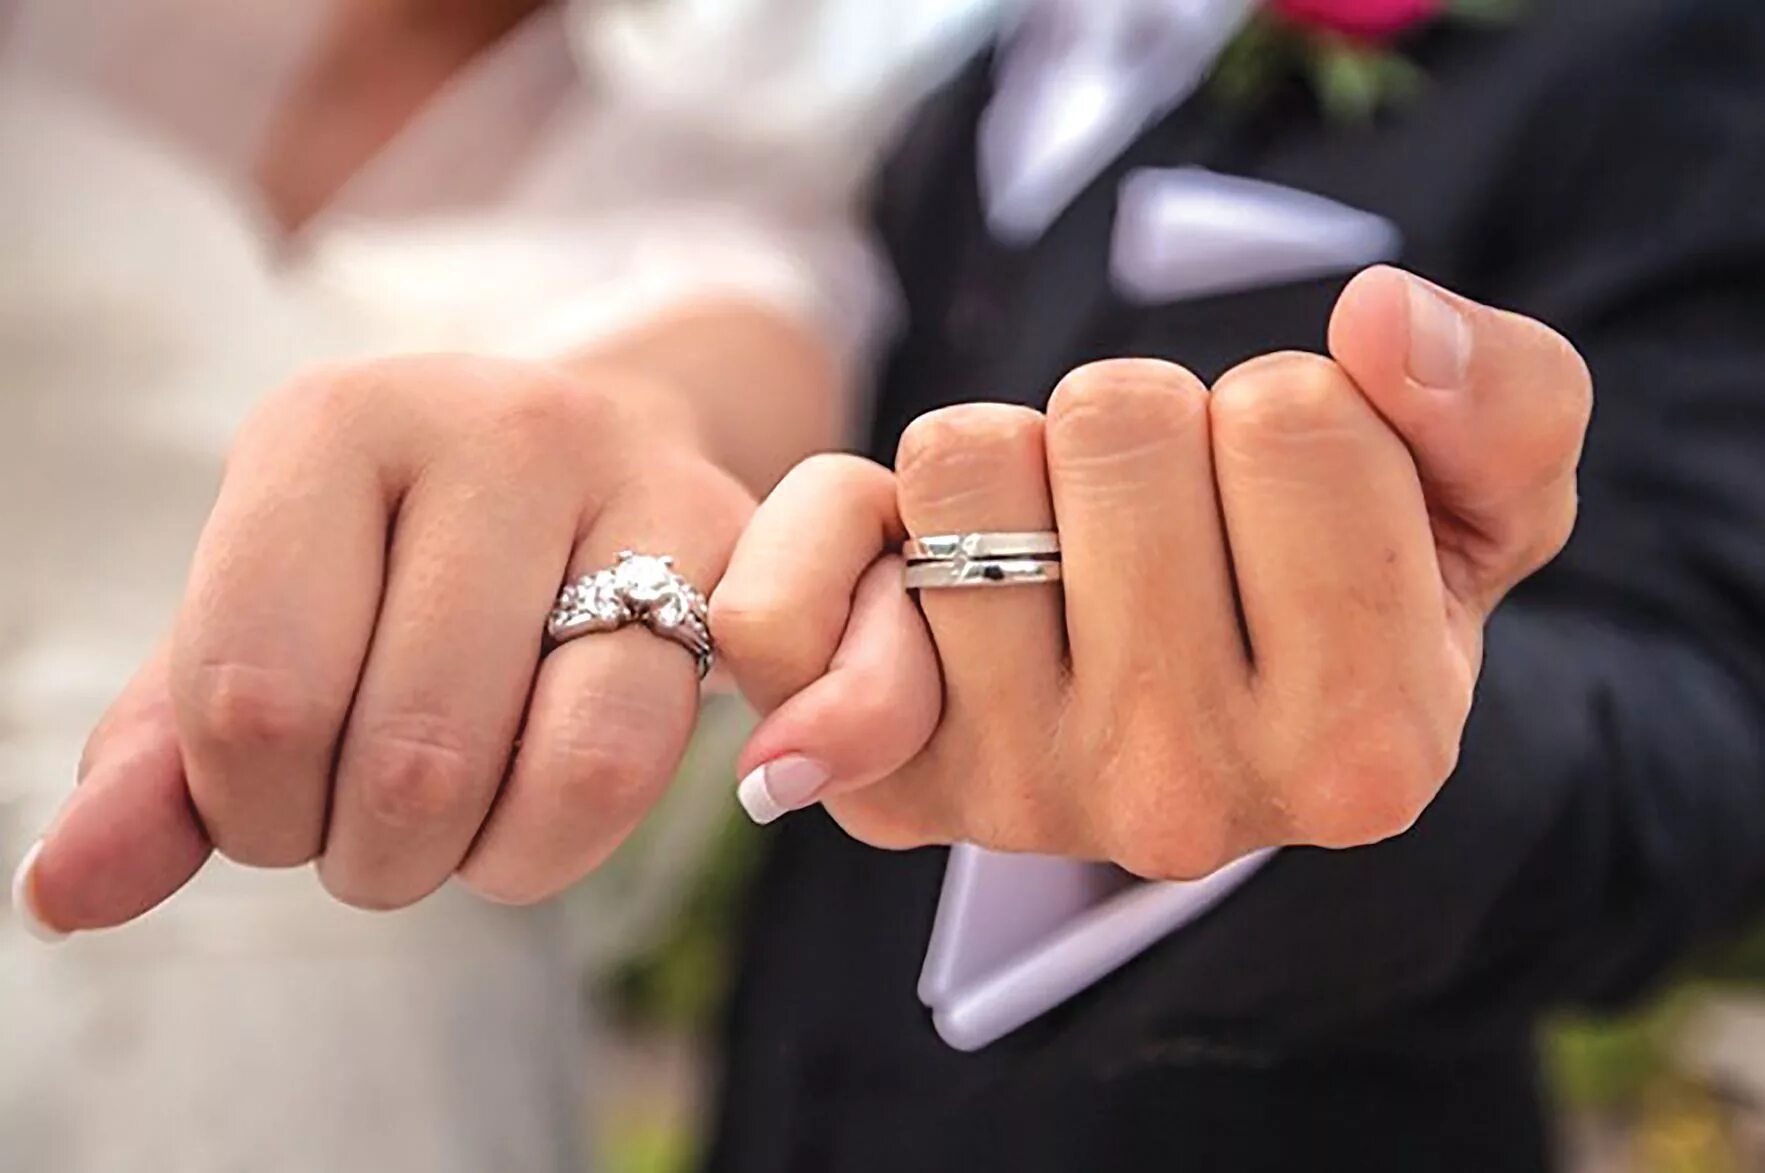 Свадебные кольца. Обручальные кольца на руках. Обручальное кольцо на пальце. Свадебные кольца на пальцах.